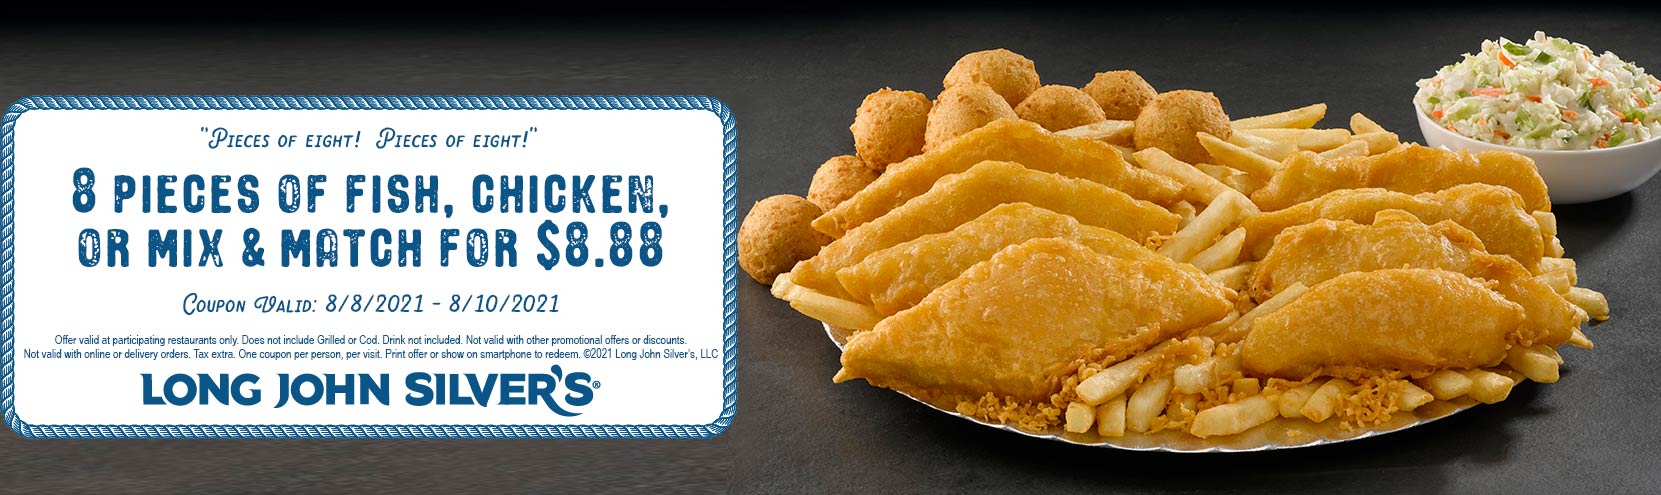 Long John Silvers restaurants Coupon  8pc chicken or fish for $8.88 at Long John Silvers #longjohnsilvers 